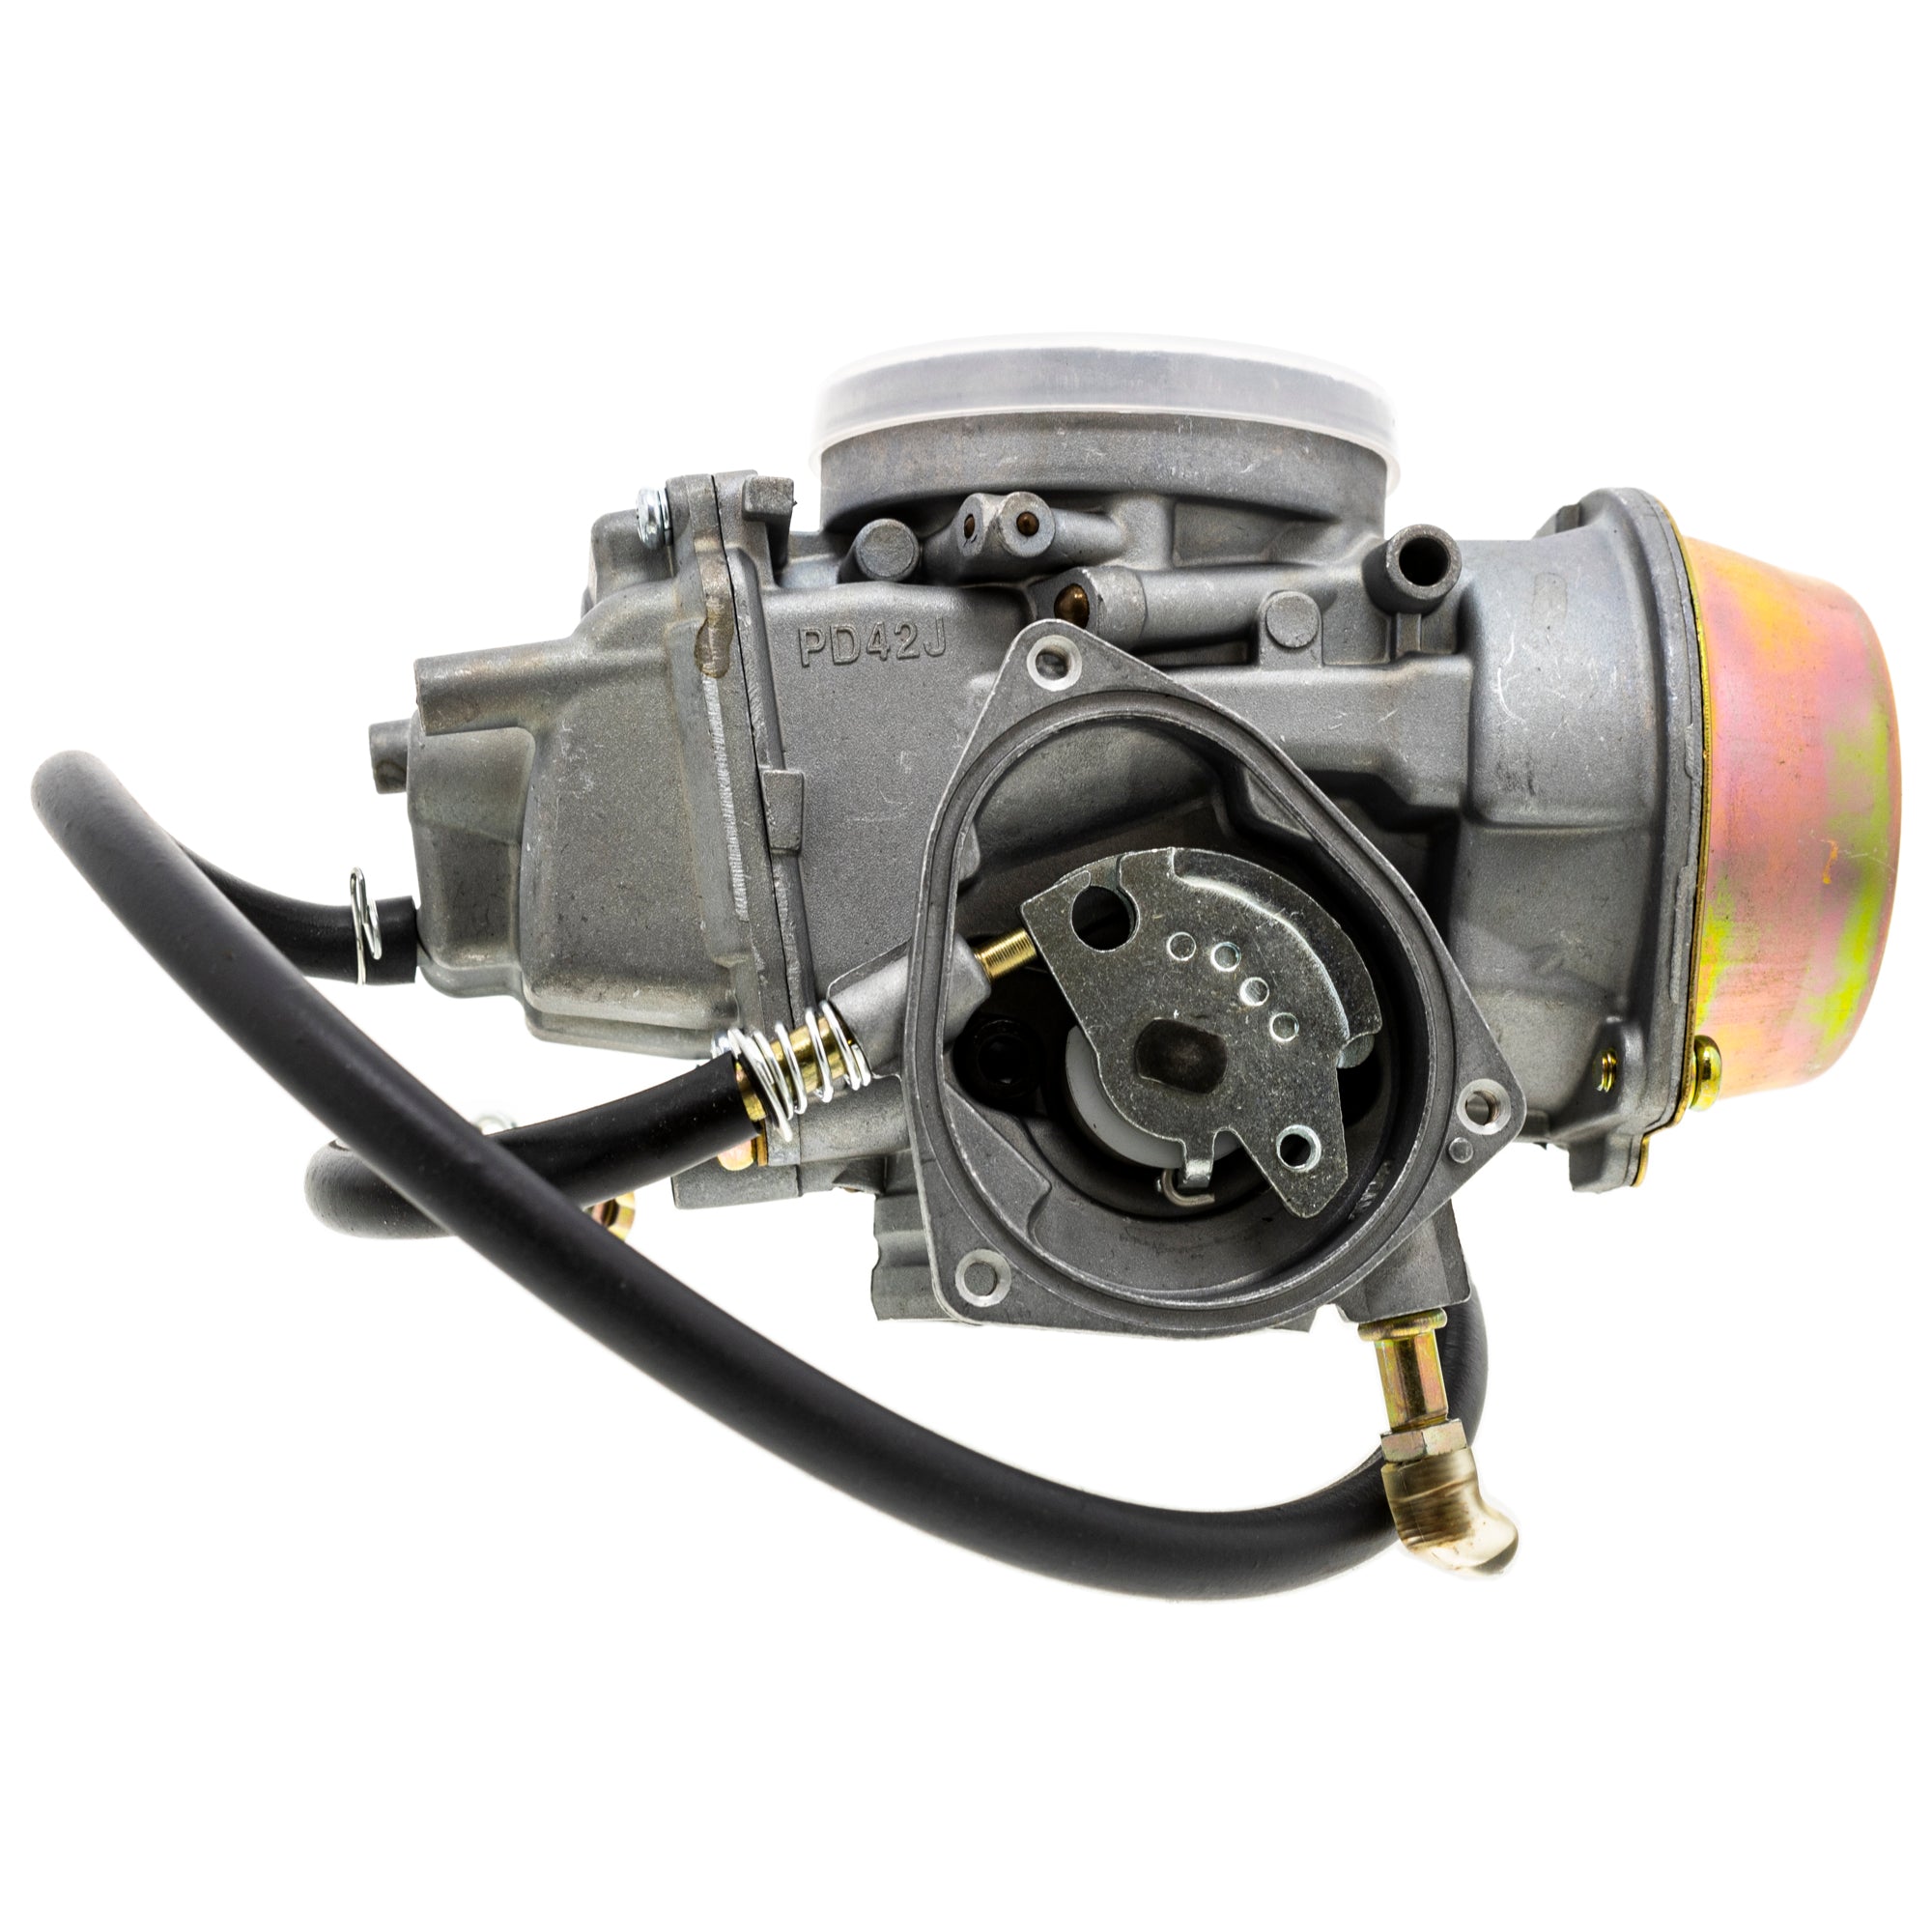 Carburetor Assembly for Yamaha Polaris BRP Can-Am Ski-Doo Sea-Doo Predator 3131574 NICHE 519-KCR2226B